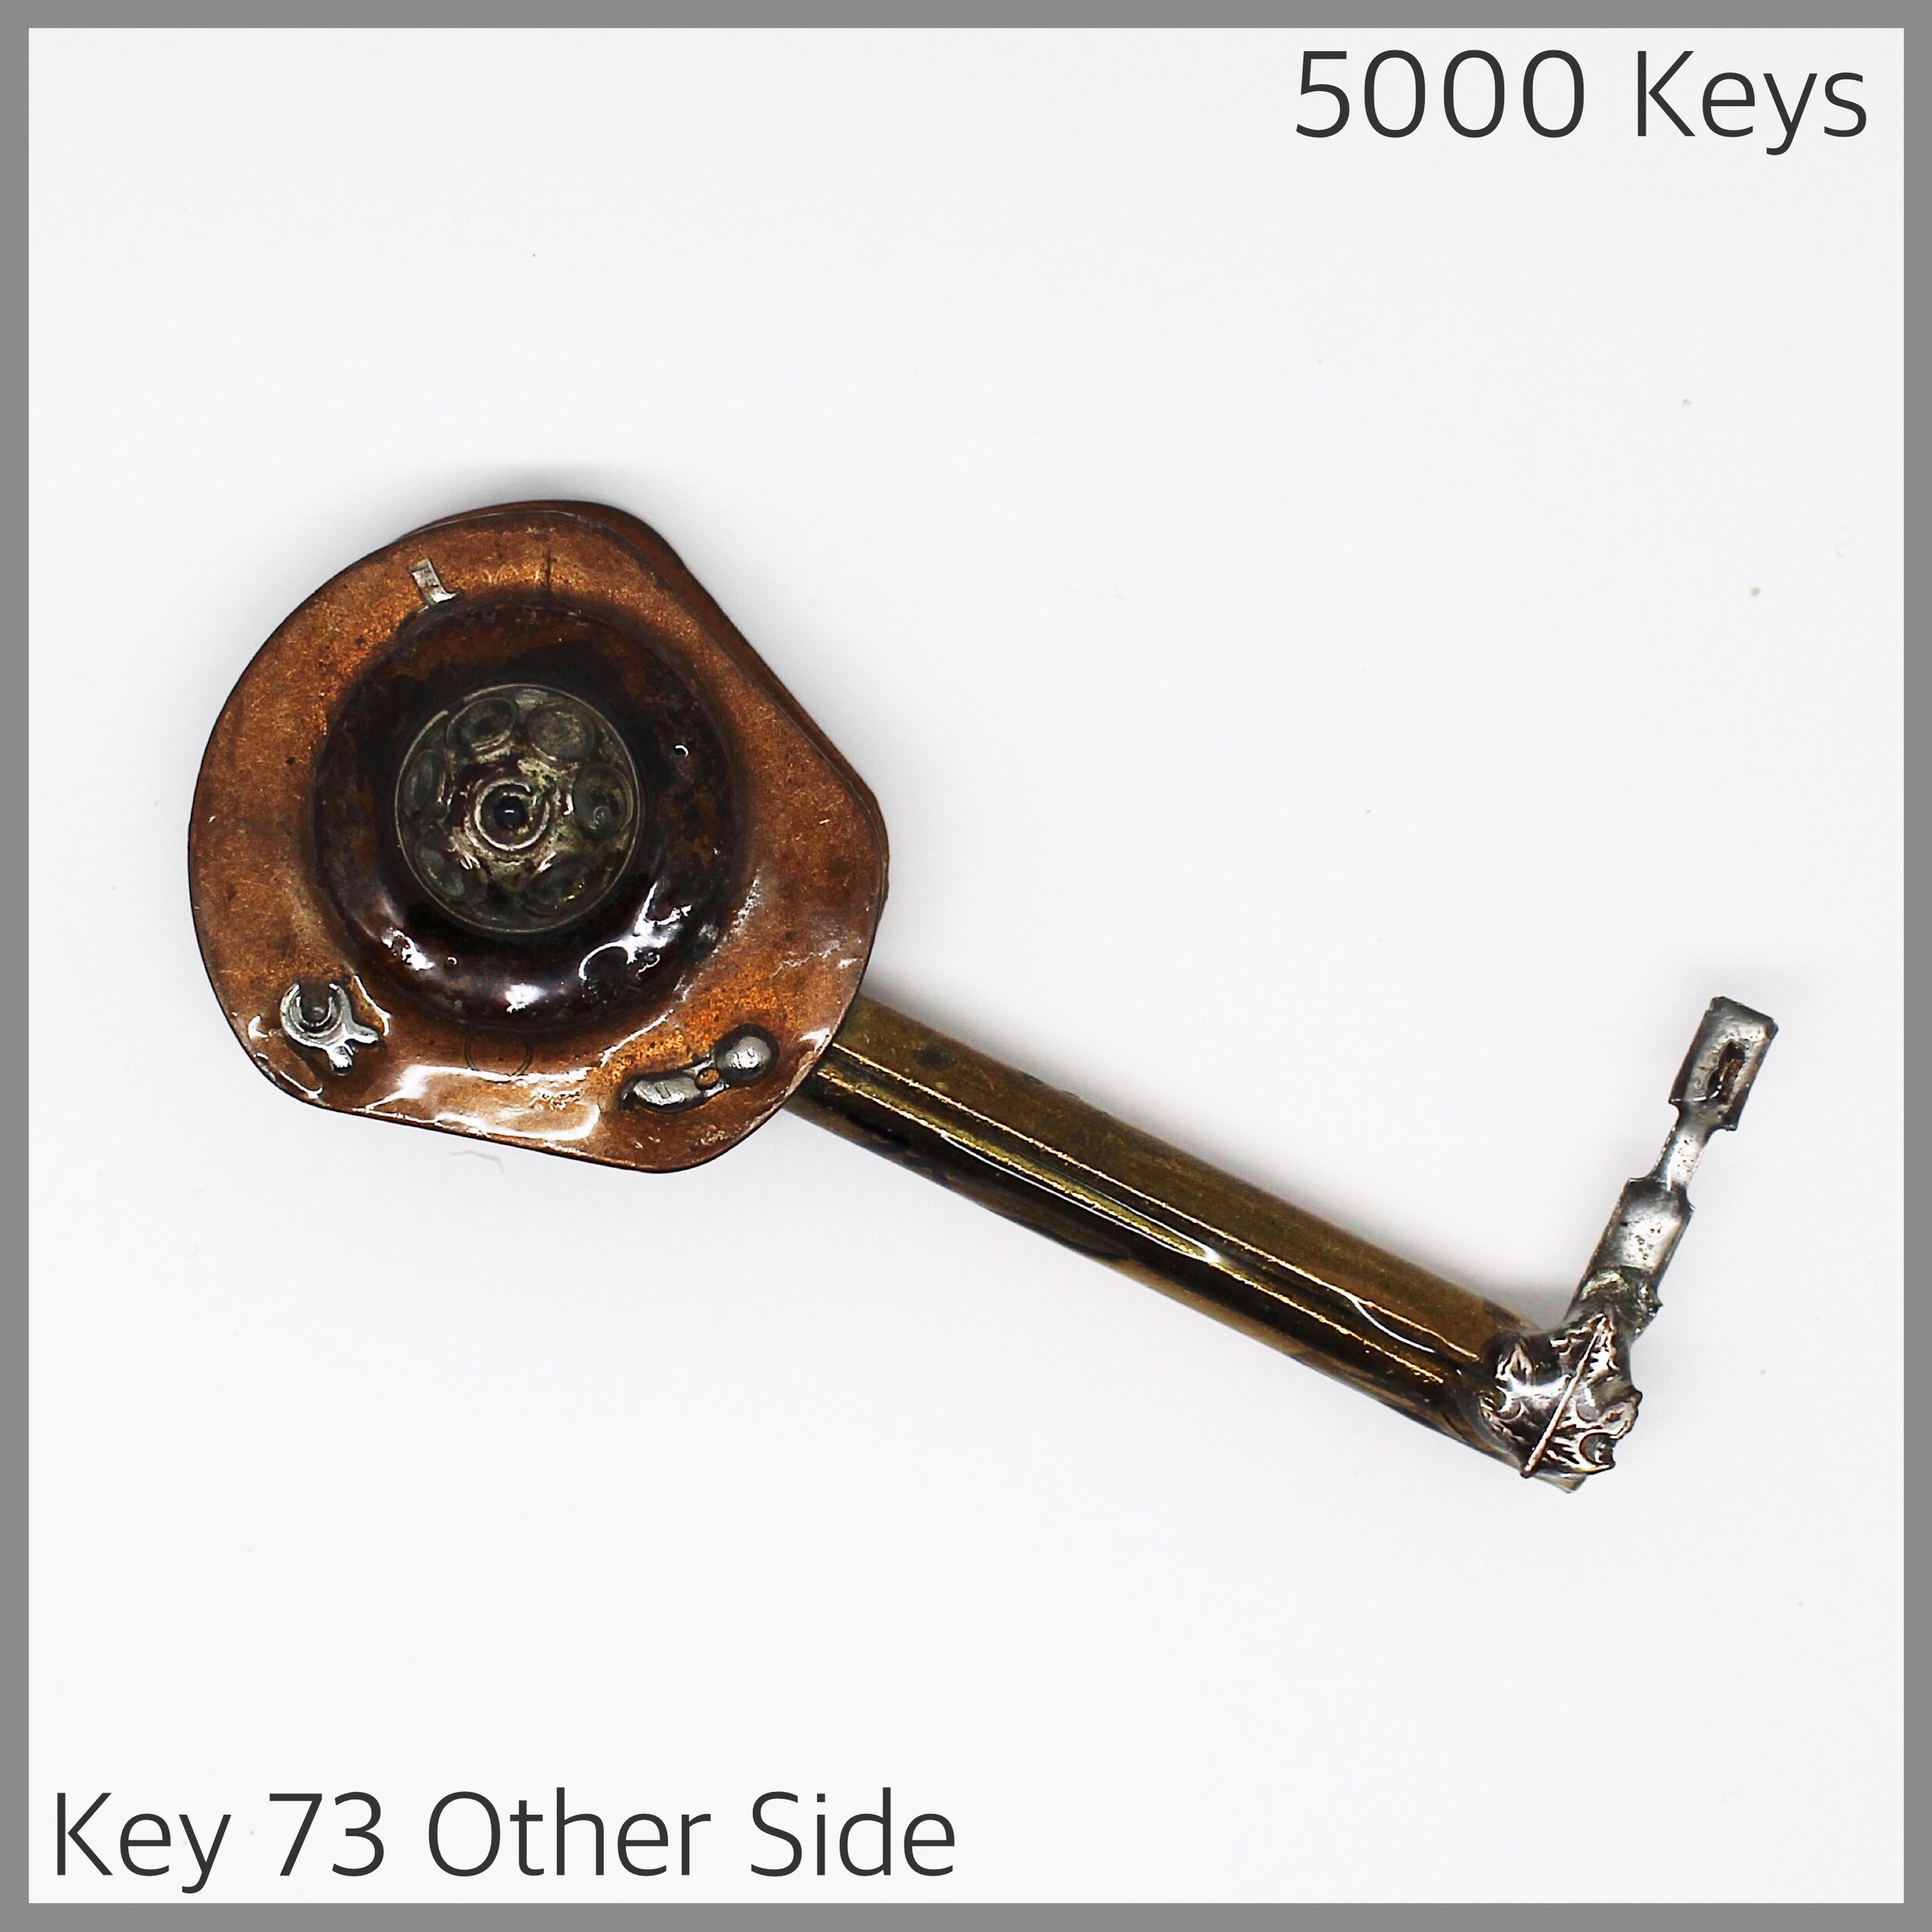 Key 73 other side - 1.JPG